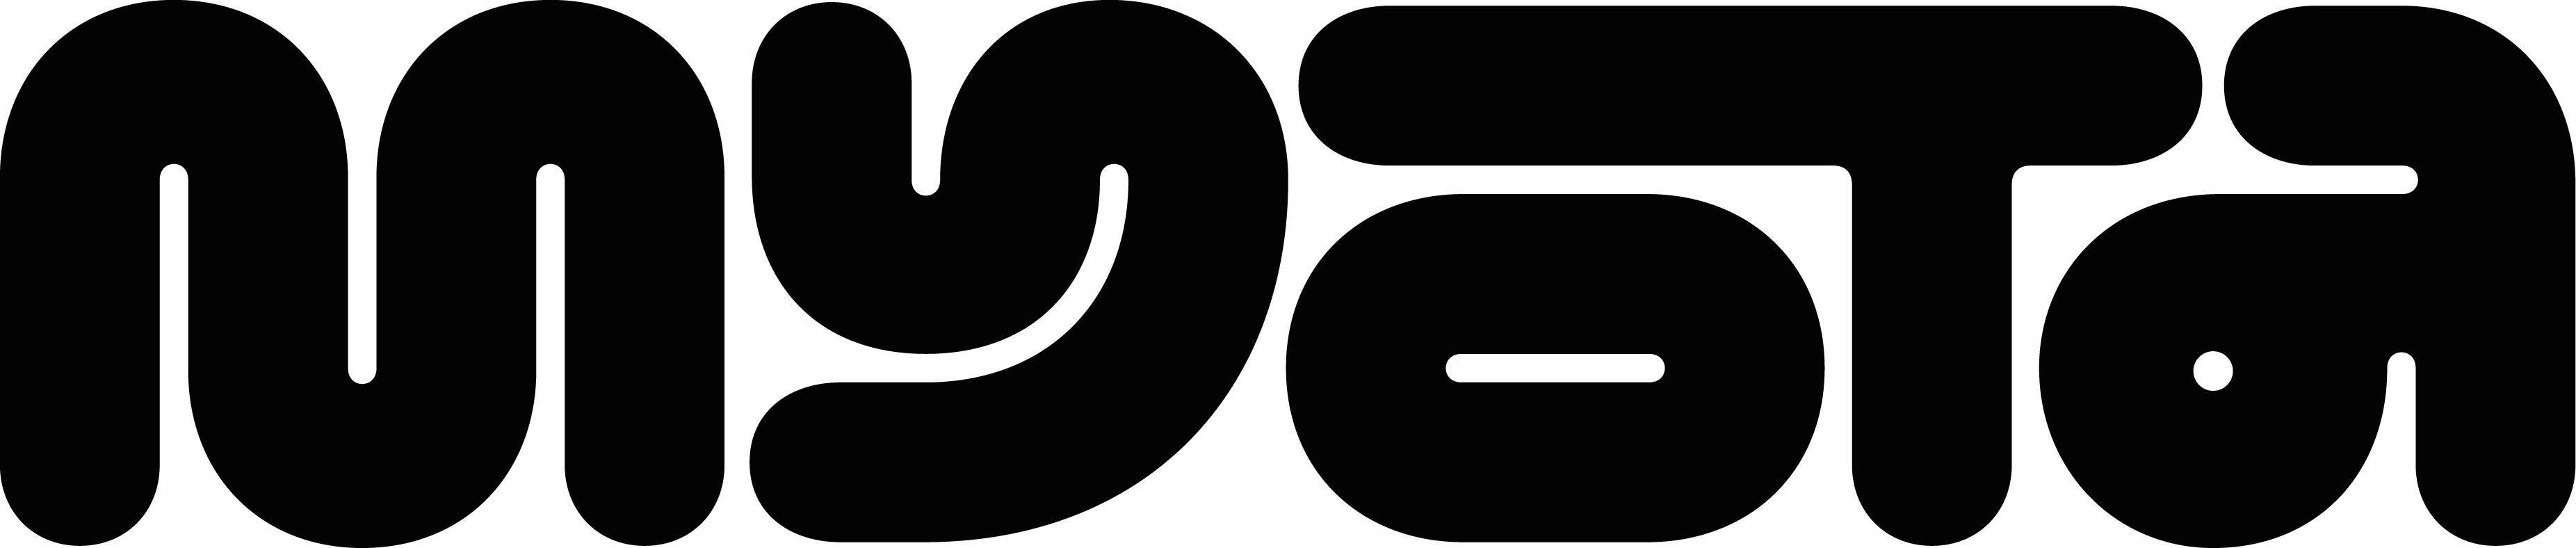 Myota logo